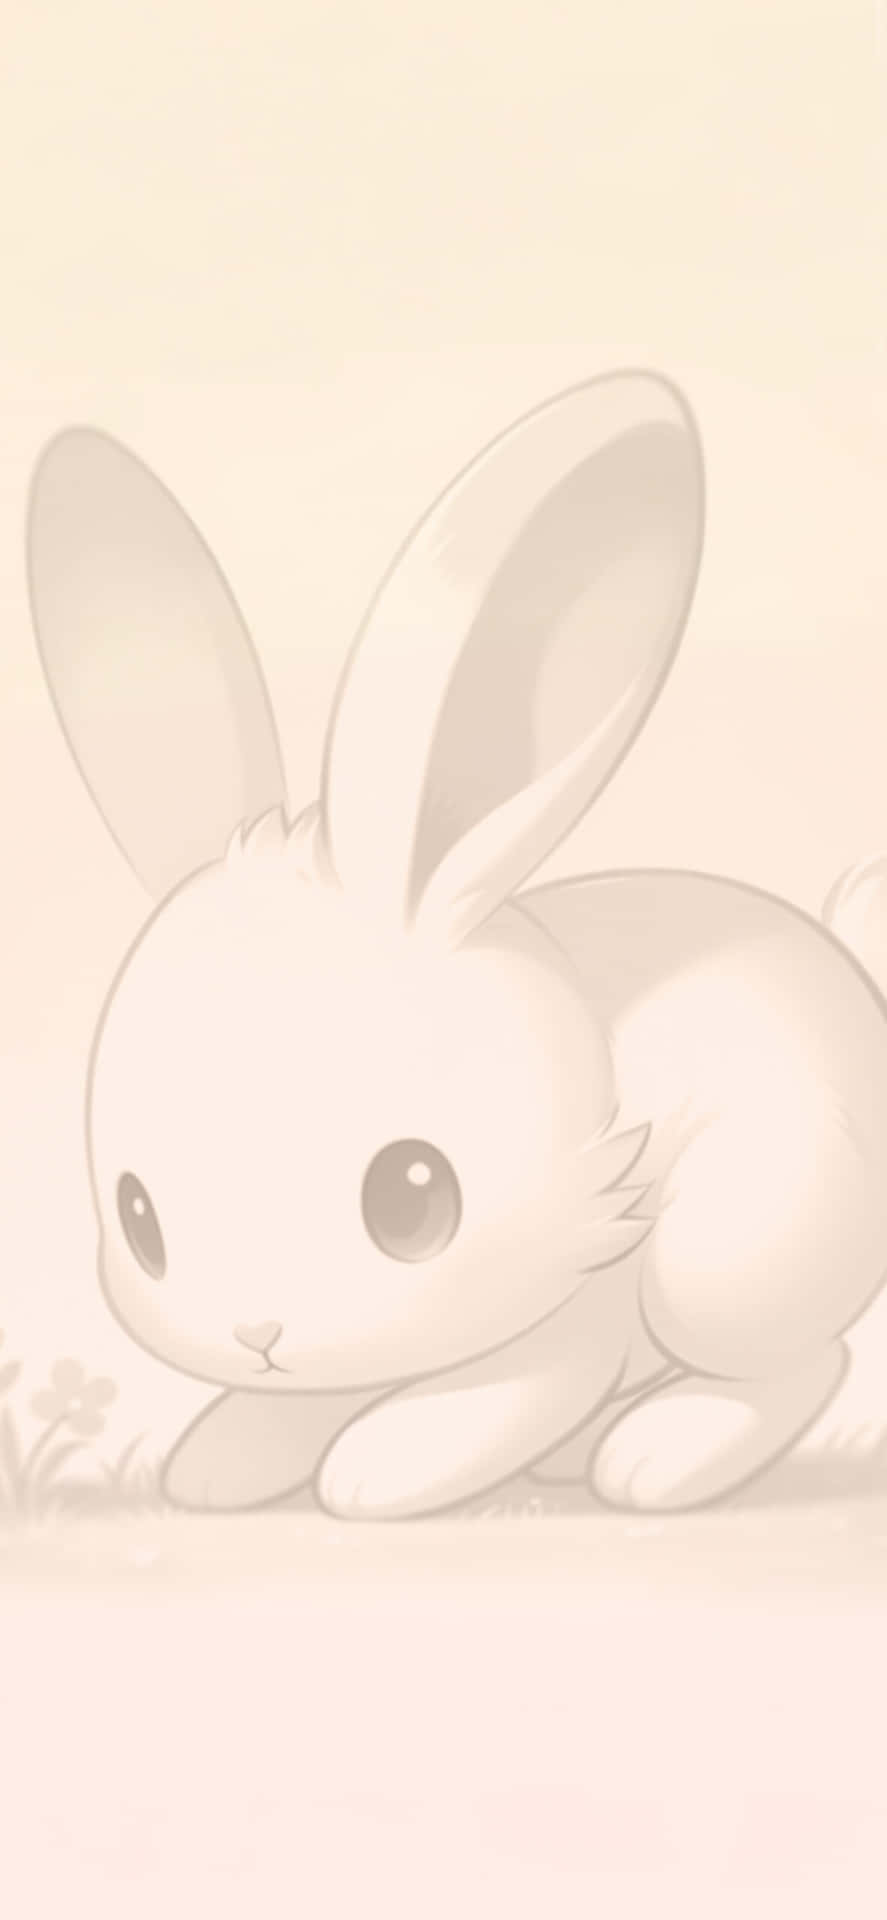 Soft Toned Bunny Illustration Wallpaper